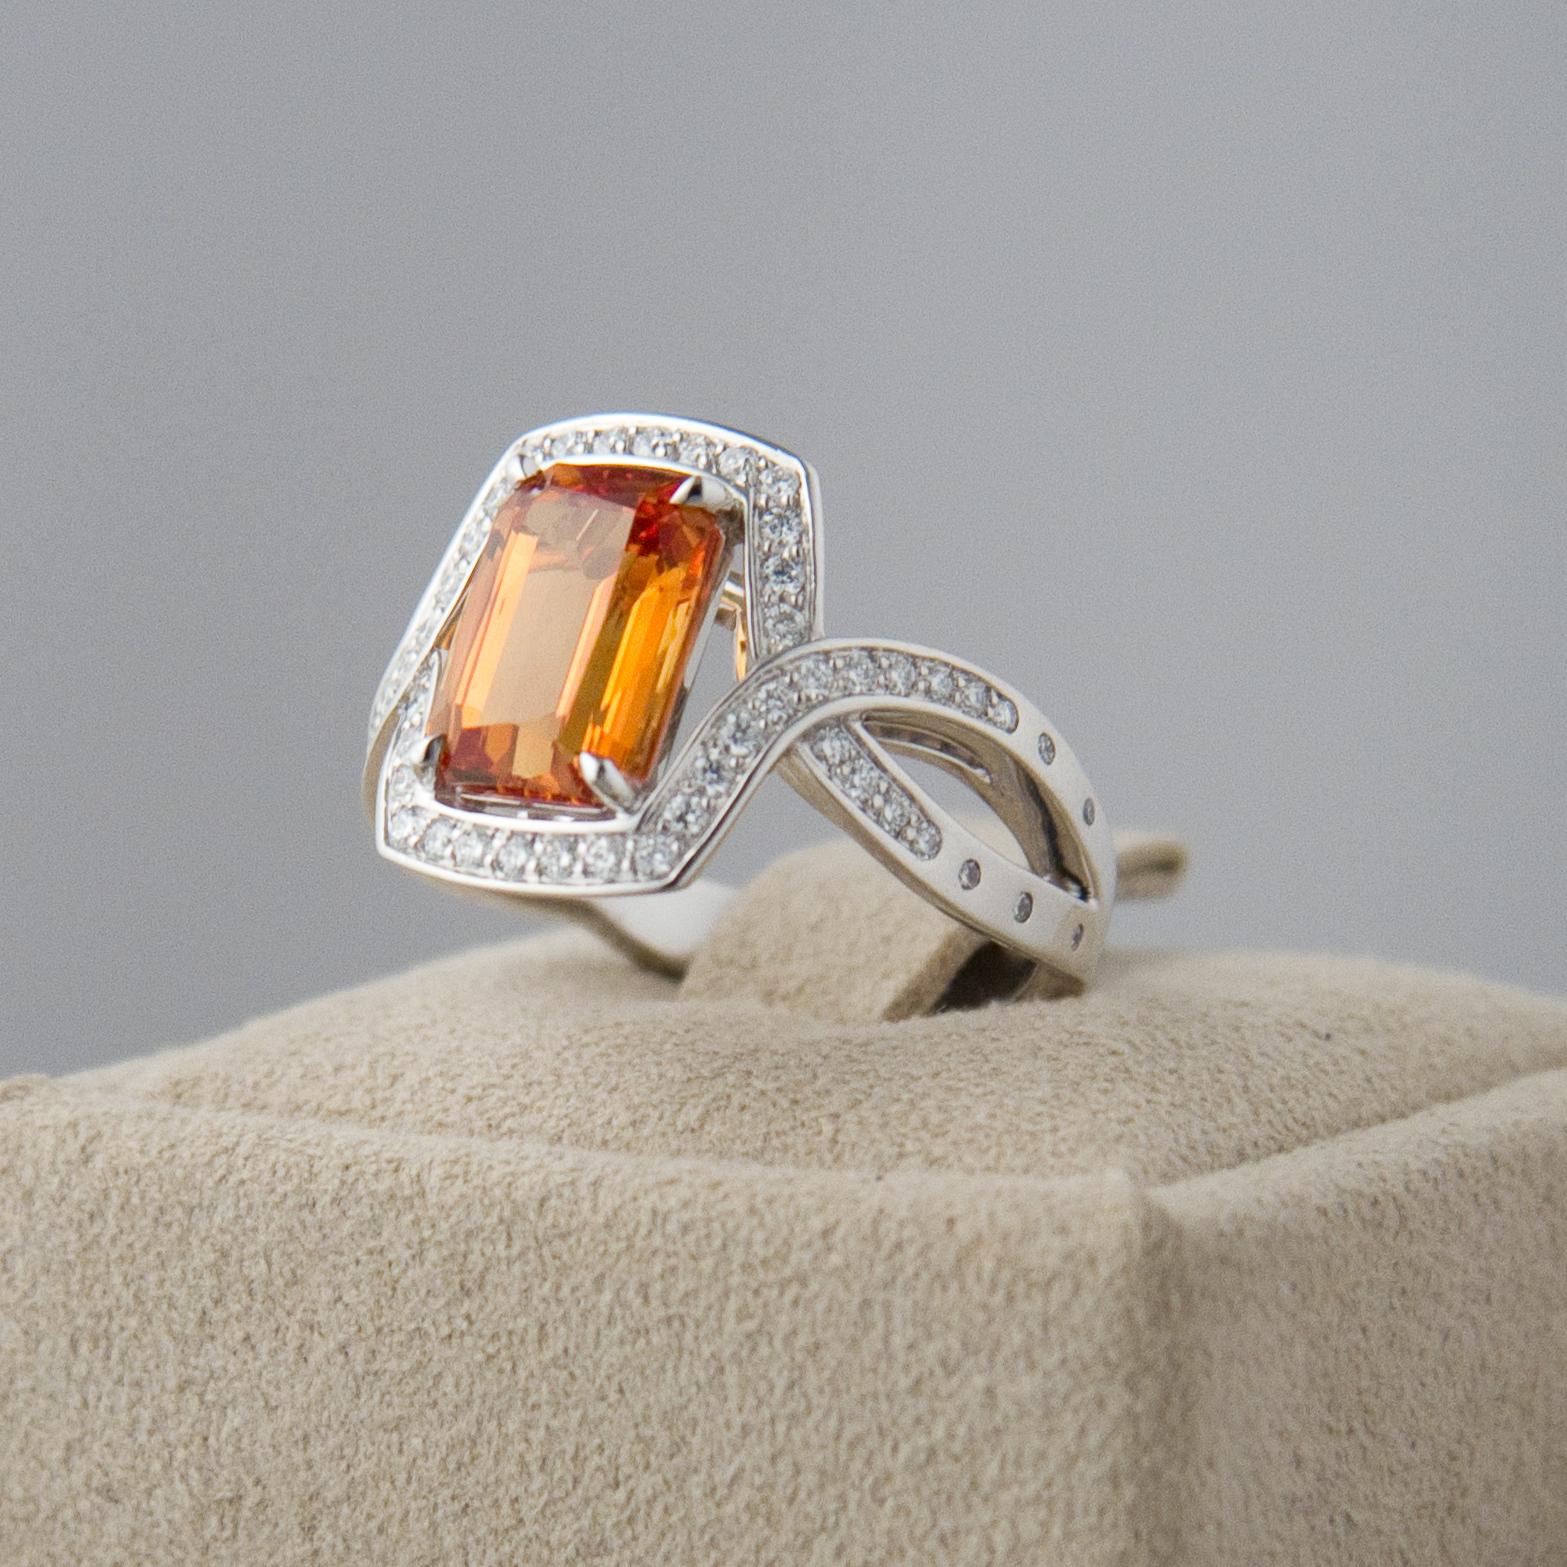 Emerald Cut Orange Sapphire 3.84 Carat with Diamond in White Gold Ring